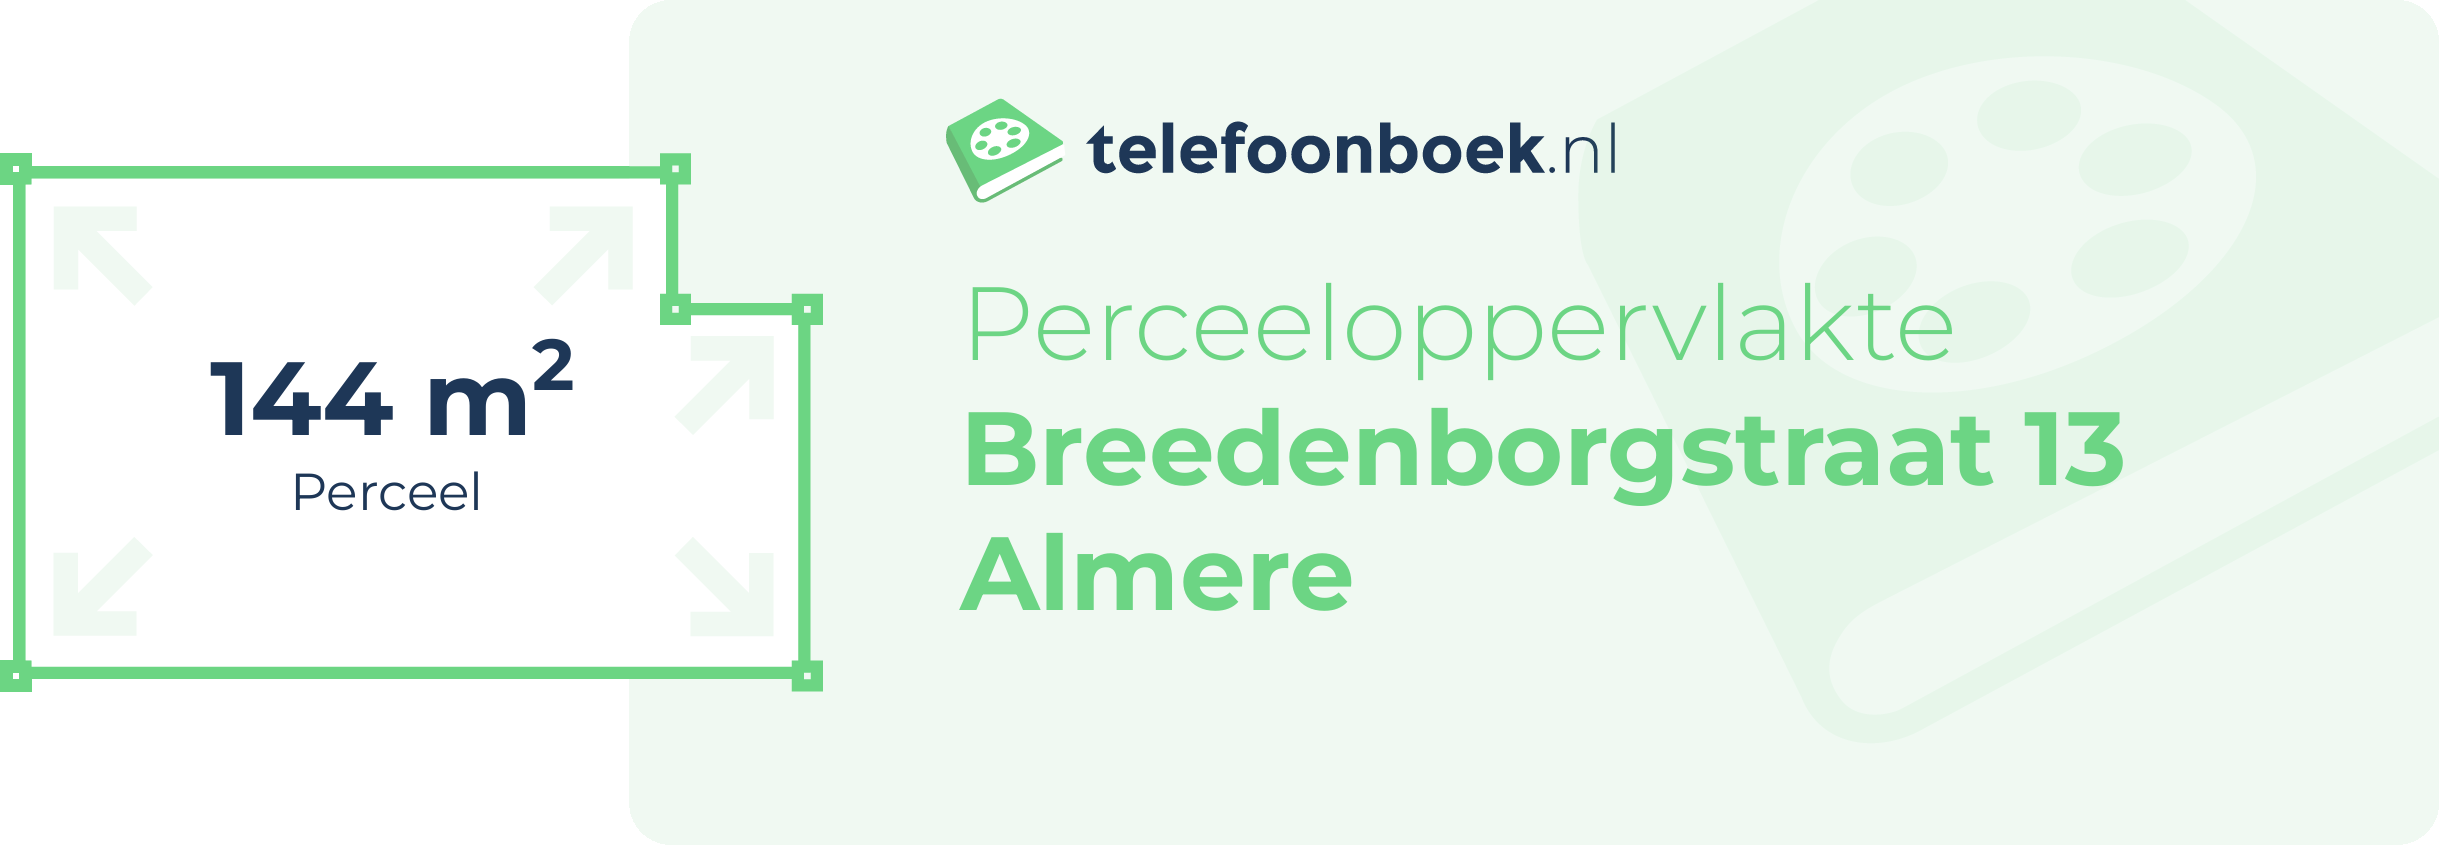 Perceeloppervlakte Breedenborgstraat 13 Almere